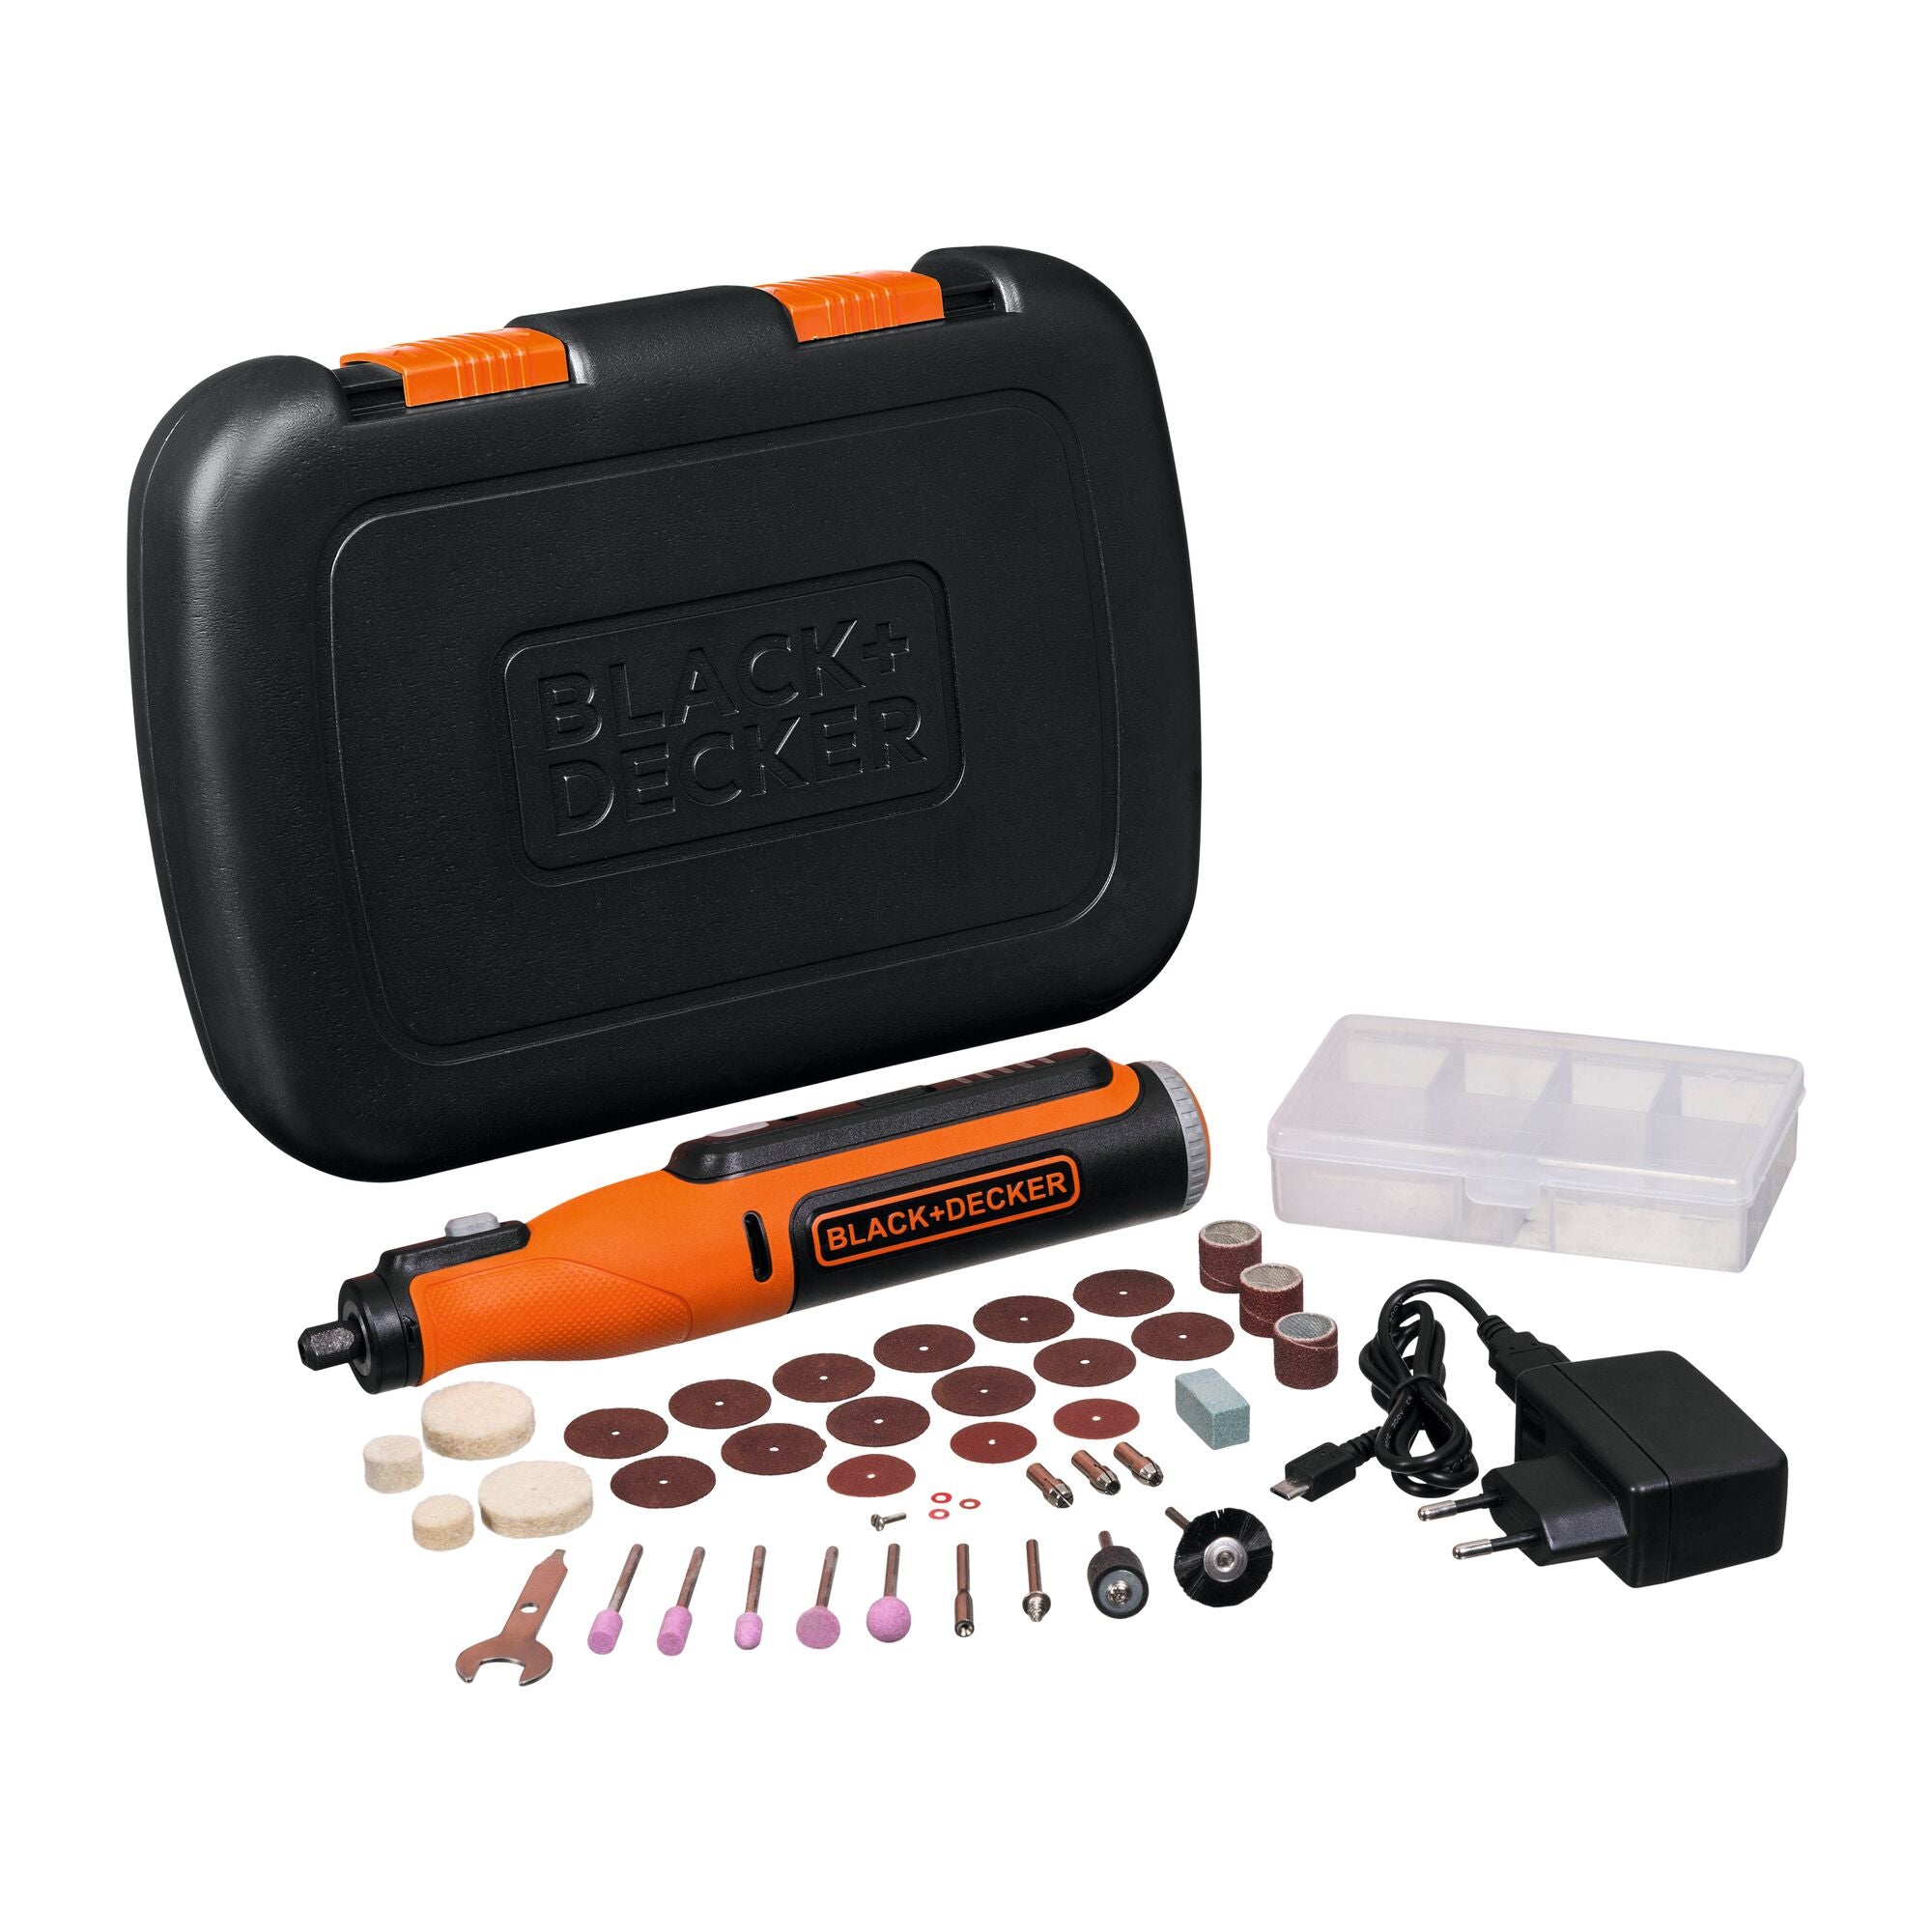 Multifunctional battery tool engraver Black + Decker bcrt8i-xj 7,2